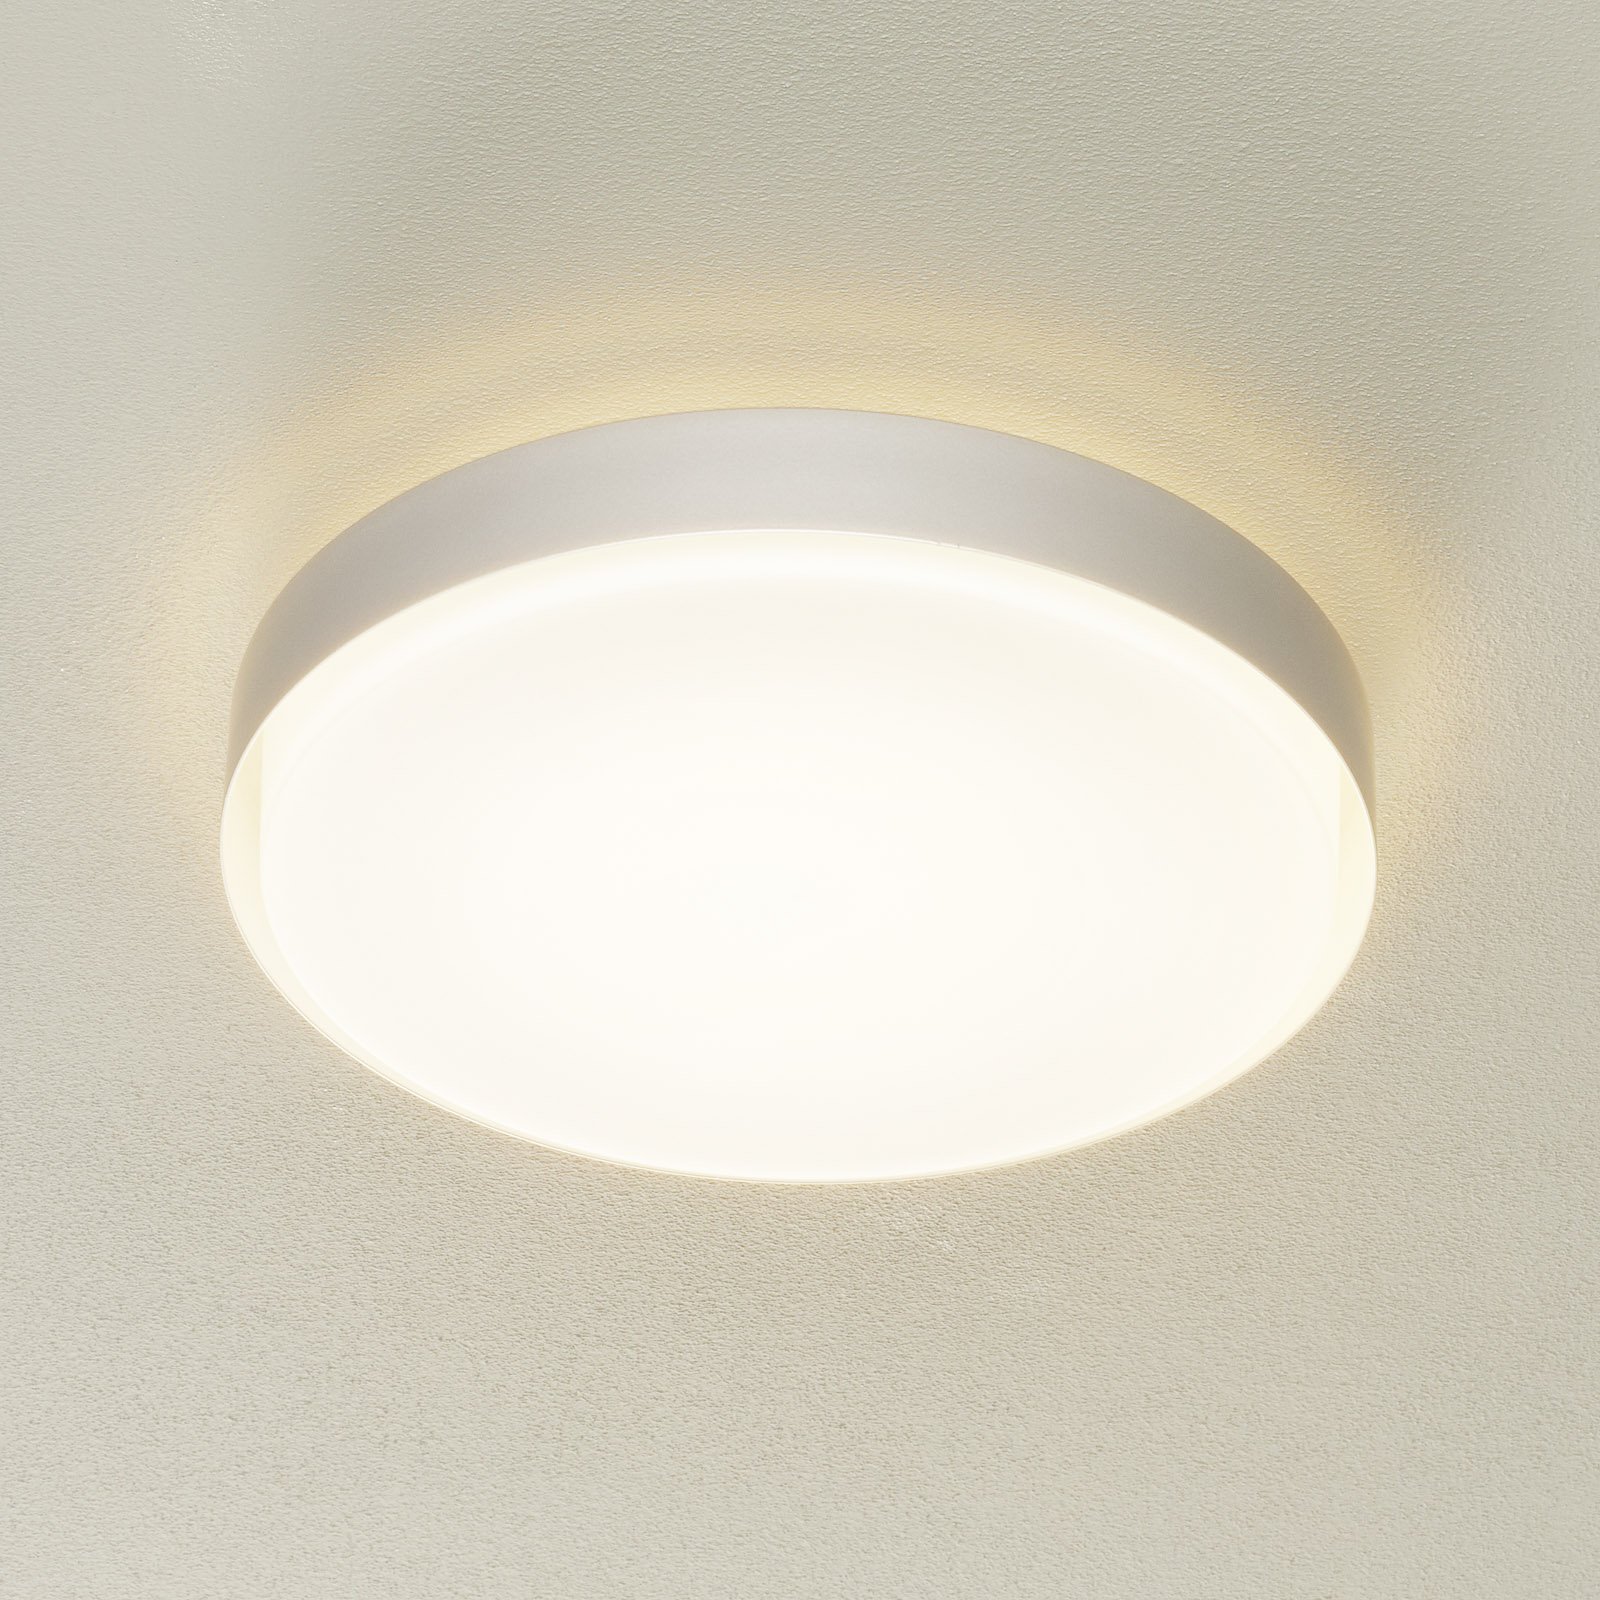 BEGA 34279 LED ceiling light aluminium Ø 42cm DALI